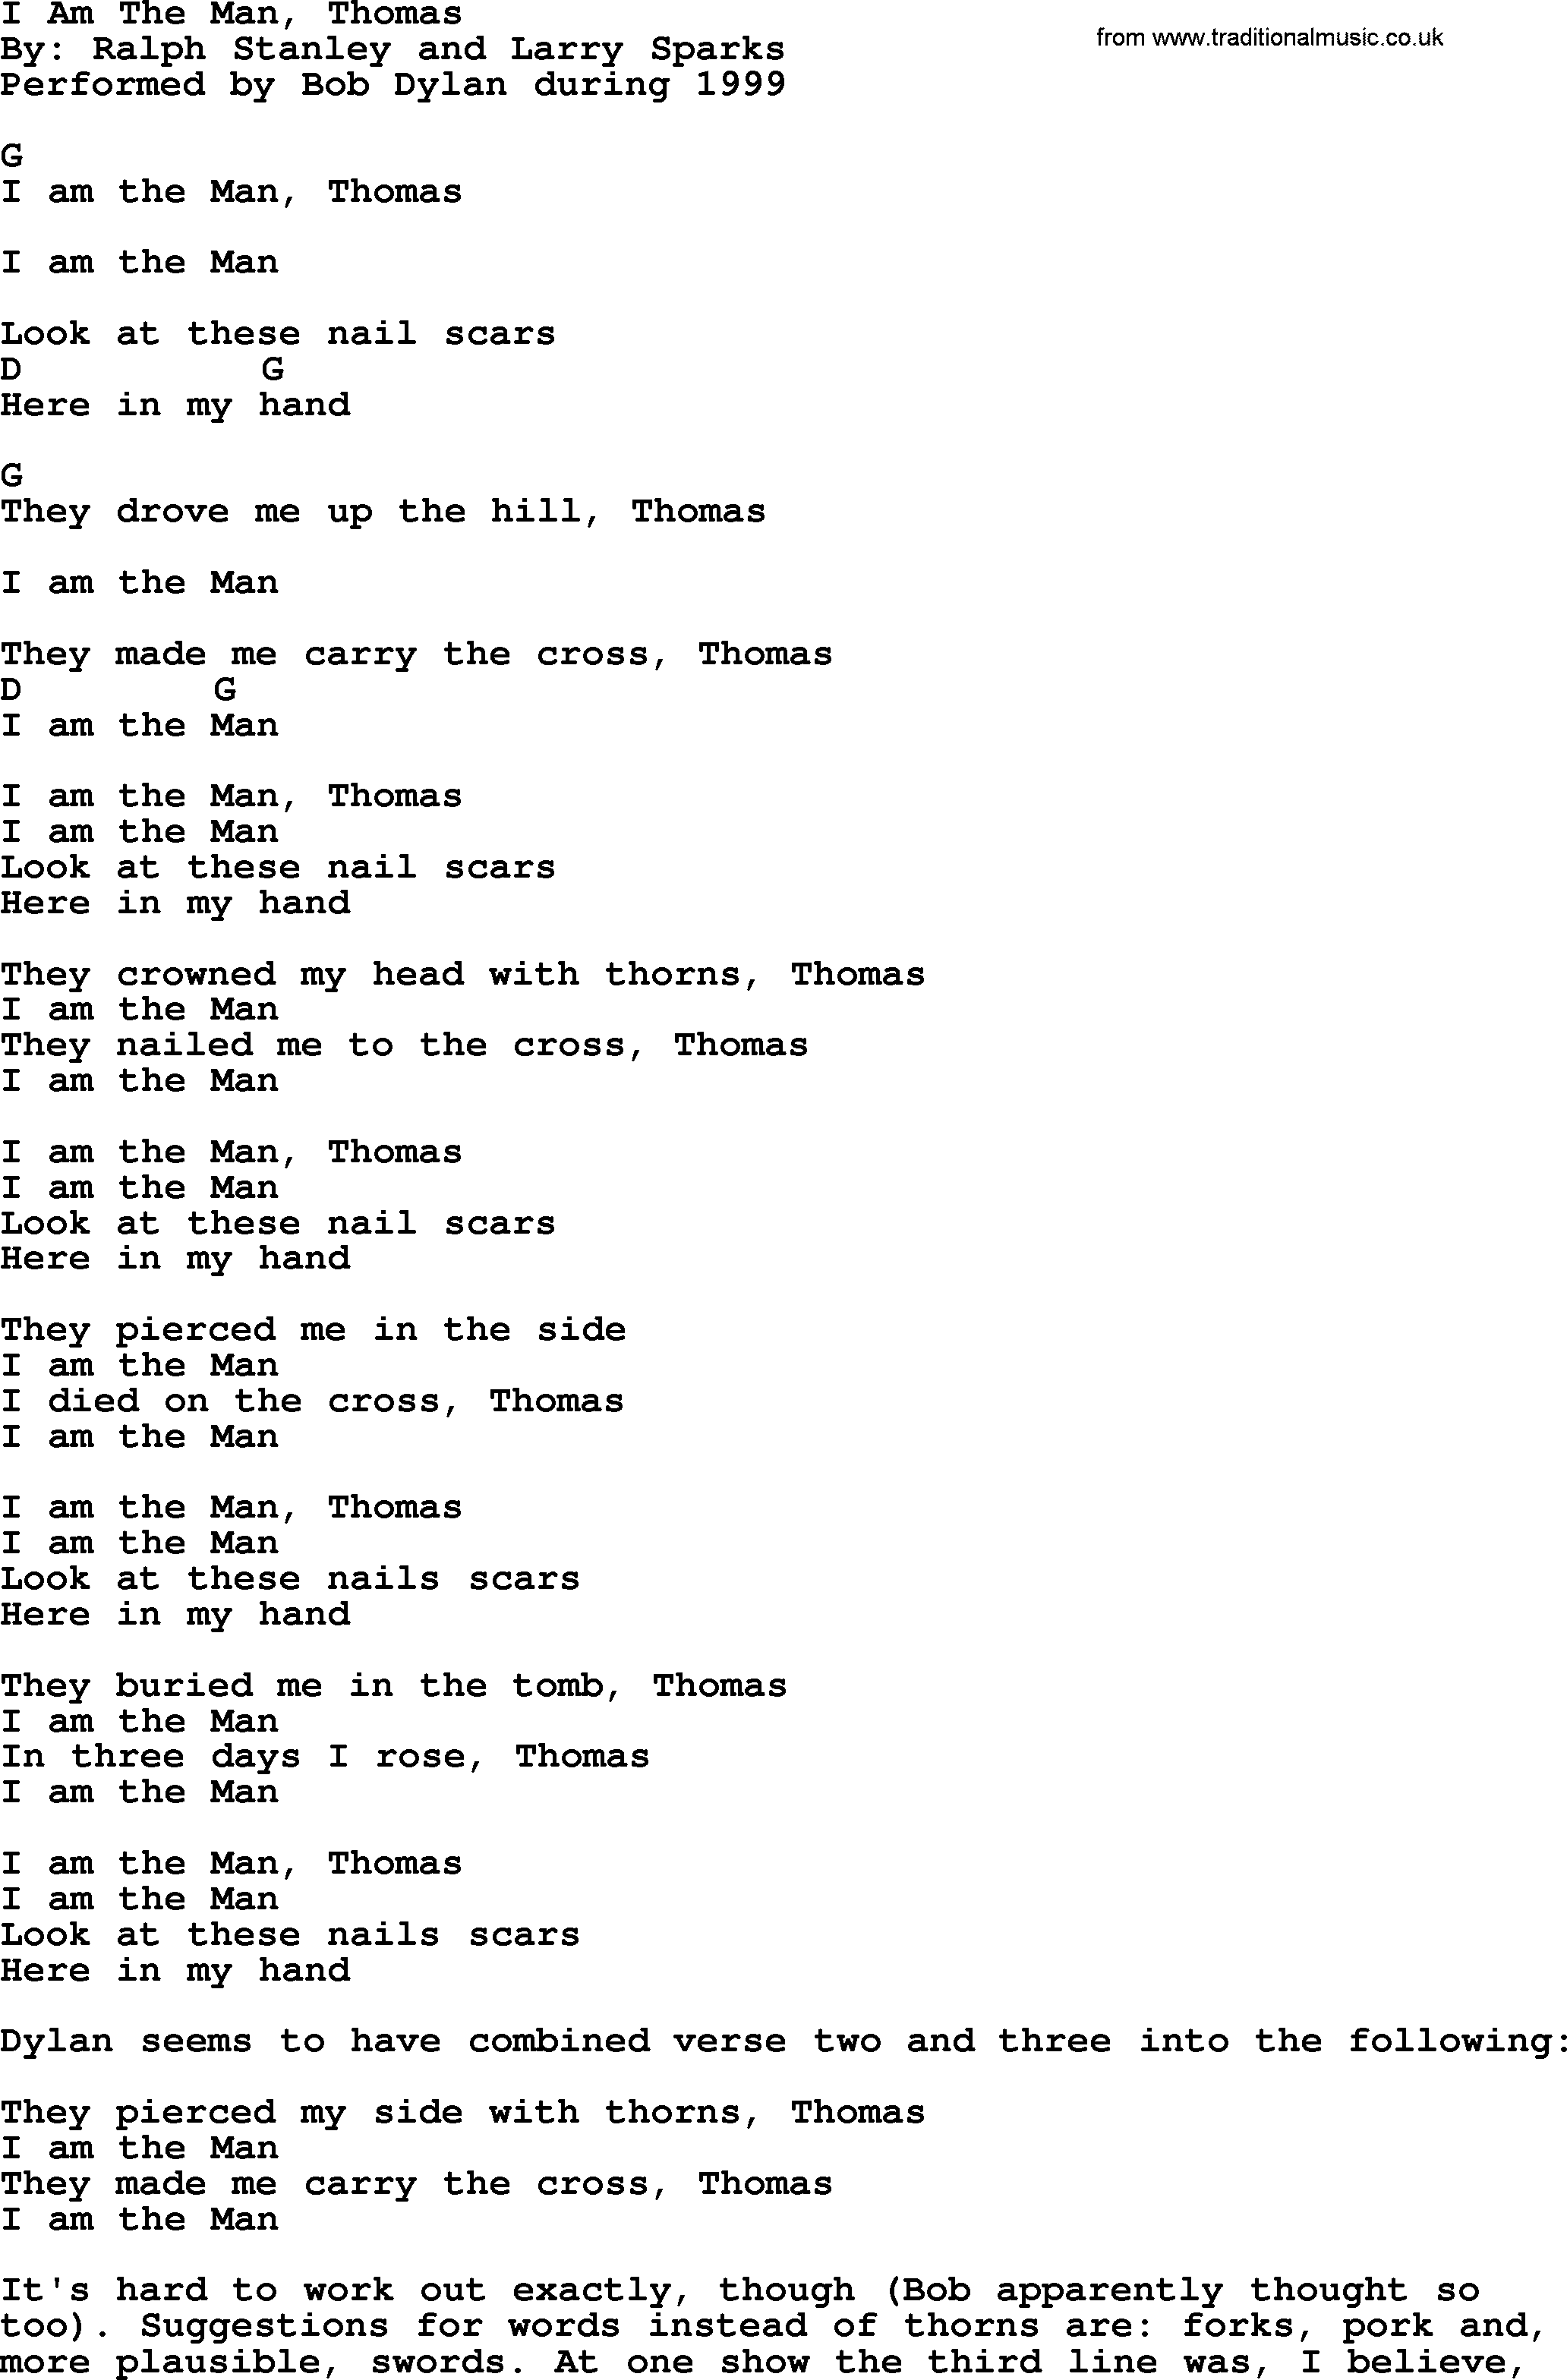 Bob Dylan song, lyrics with chords - I Am The Man, Thomas